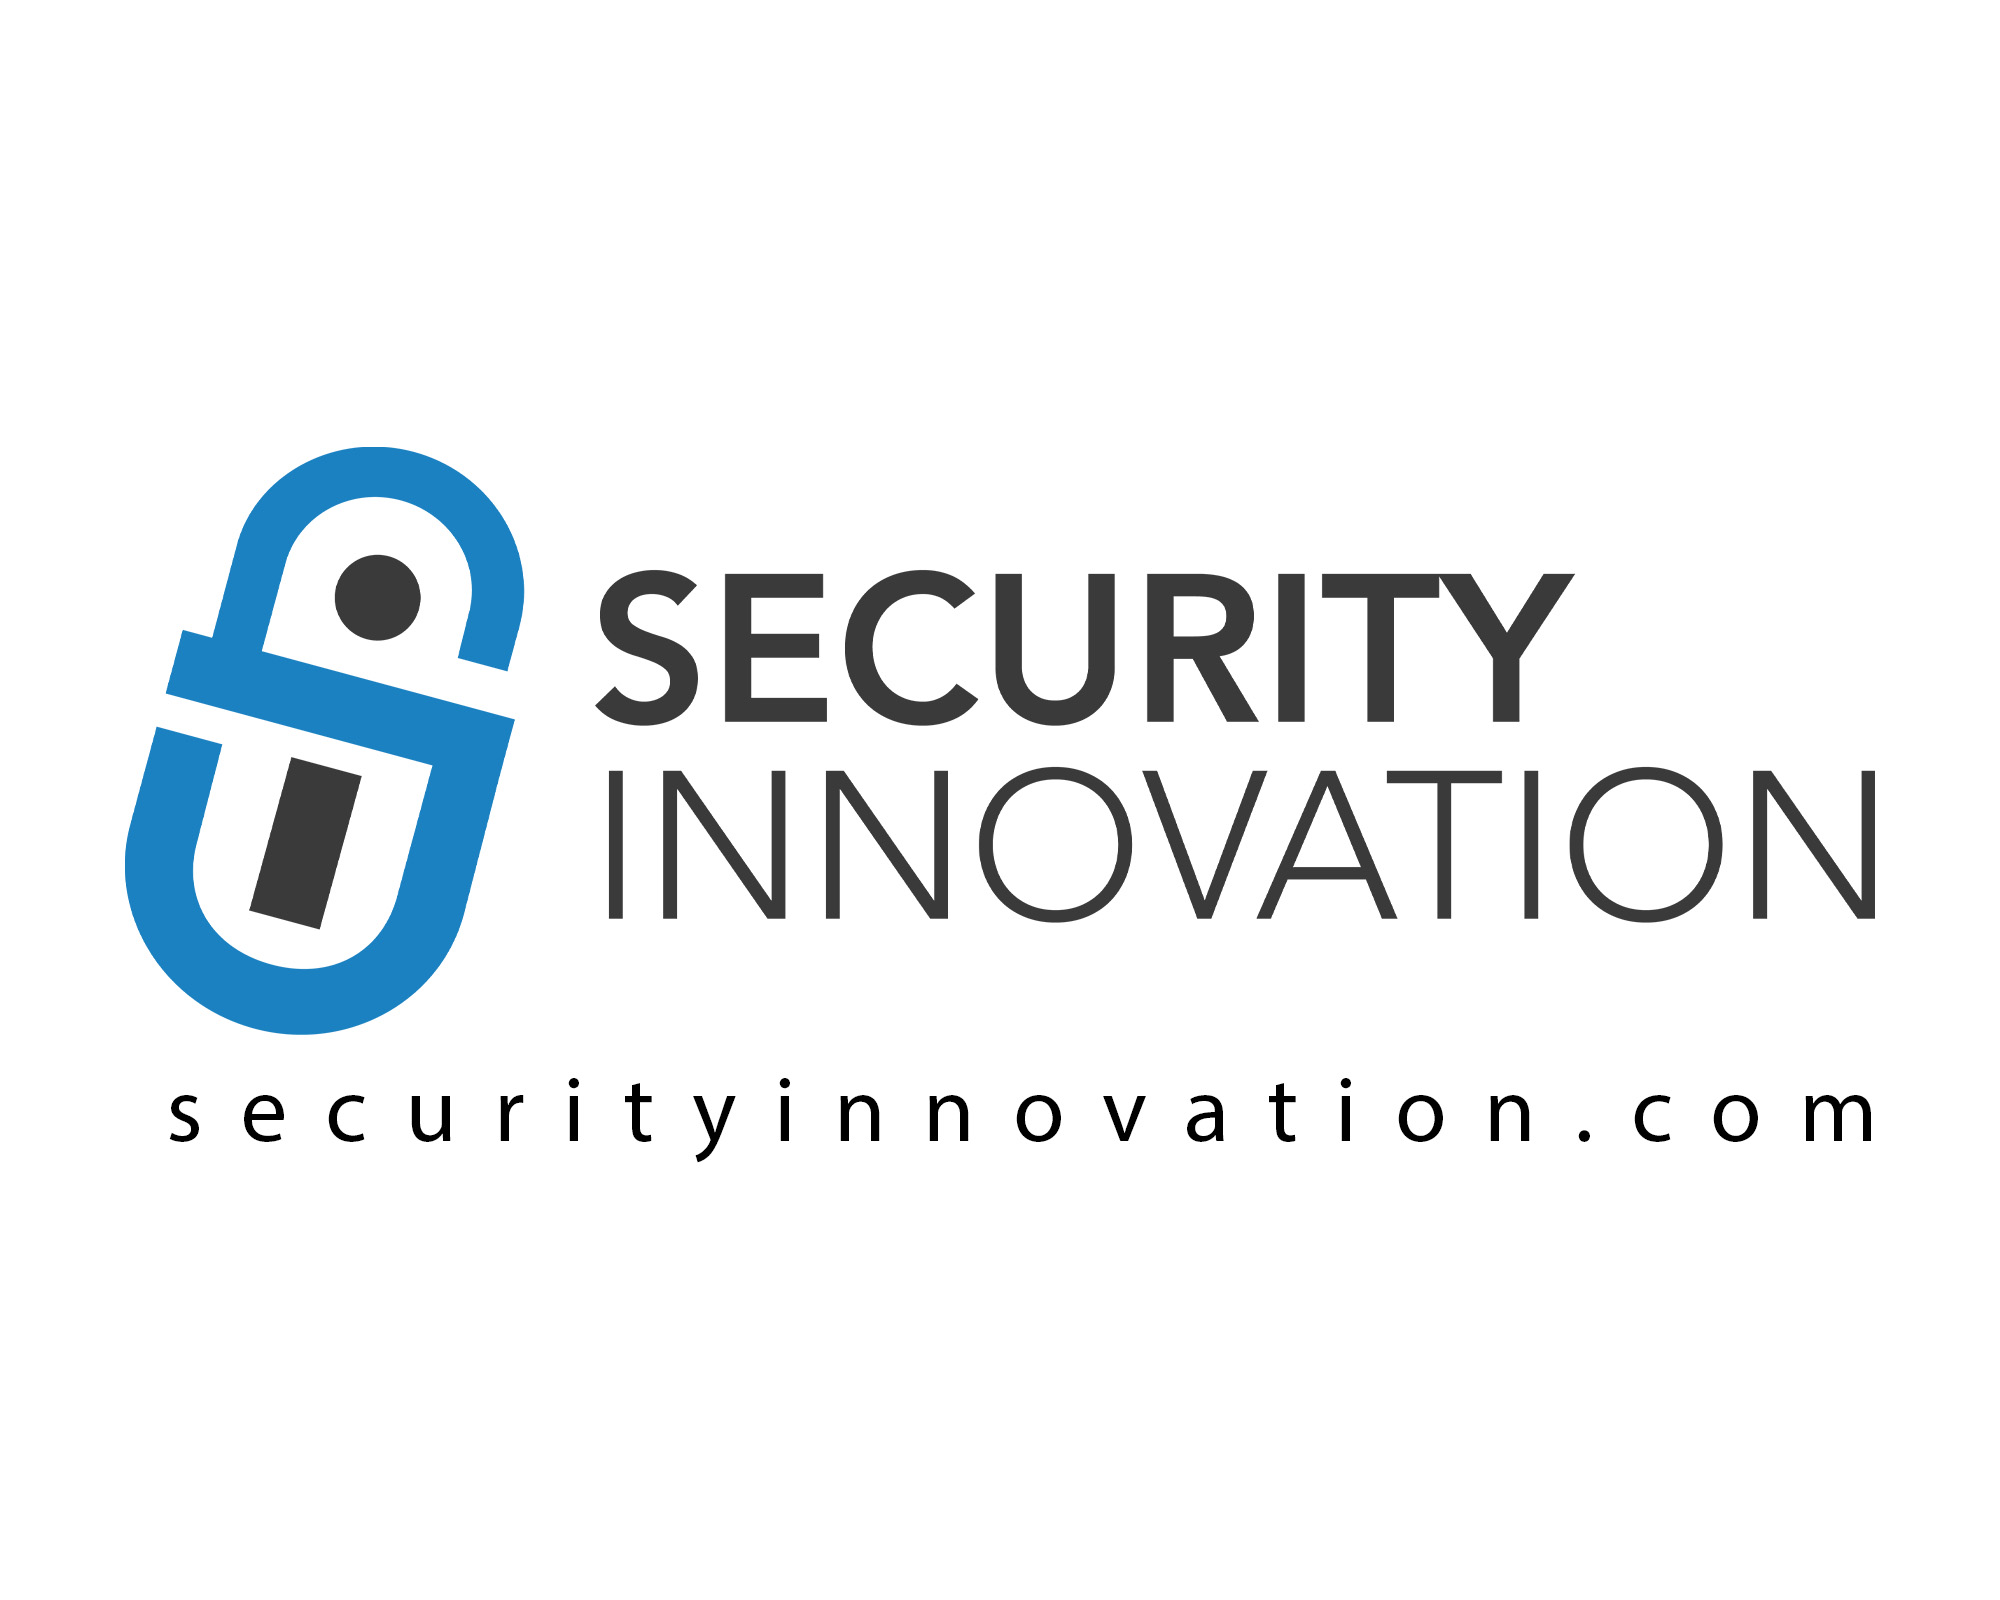 (c) Securityinnovation.com